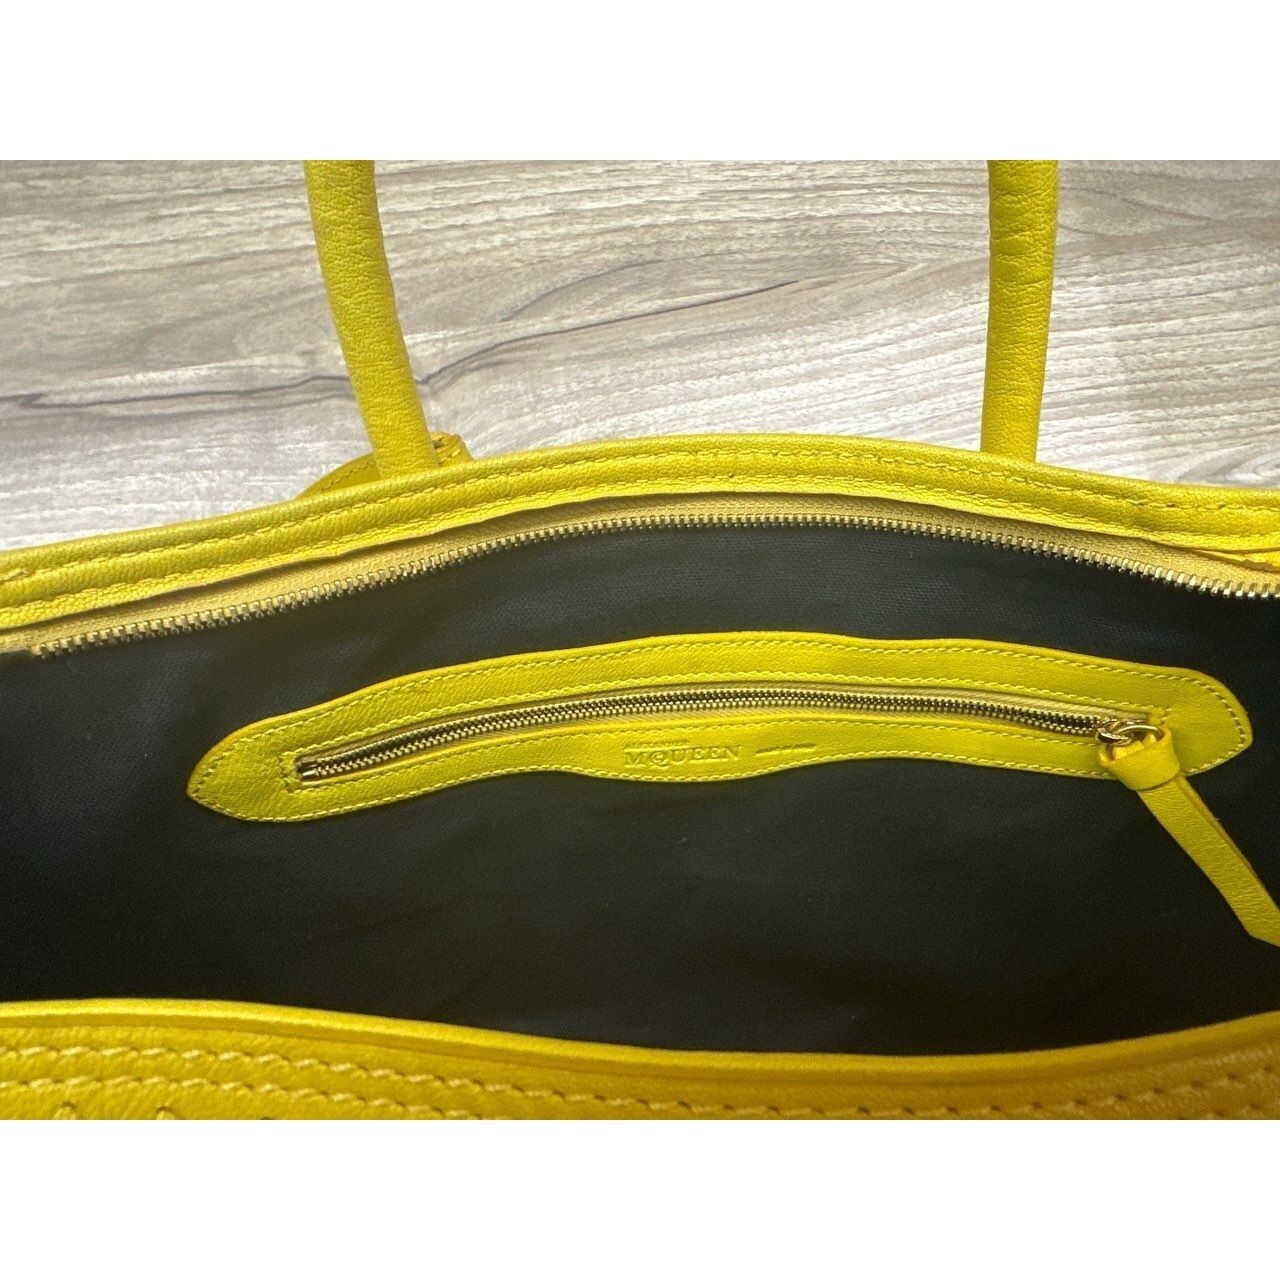 Alexander McQueen Yellow & Caramel Handbag